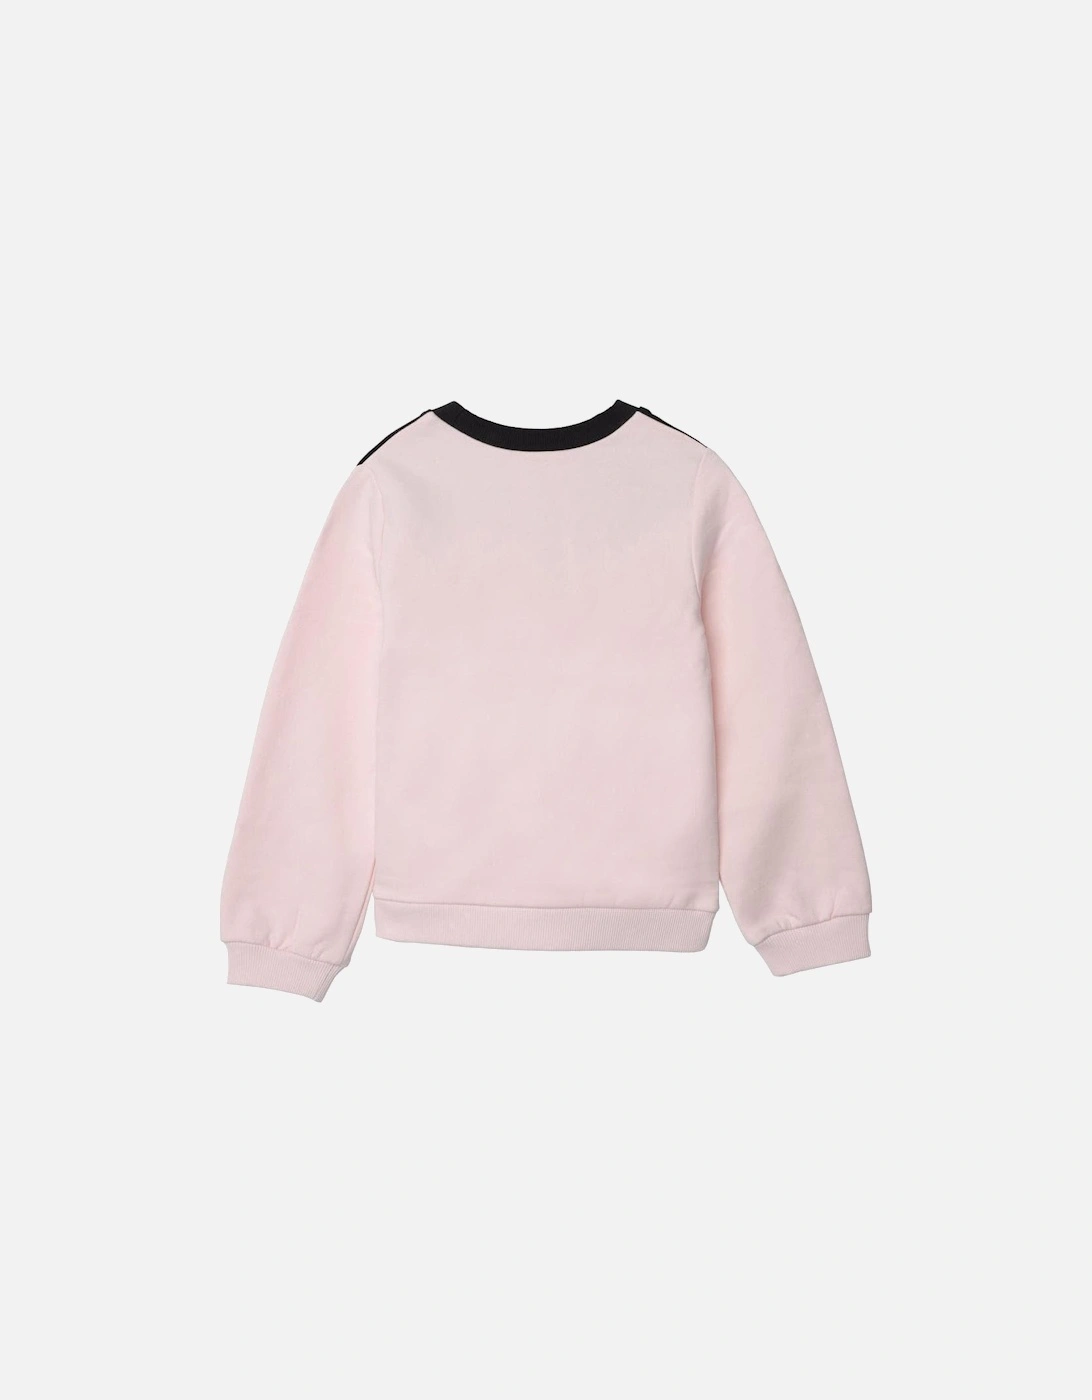 Girls Pink & Black Sweatshirt